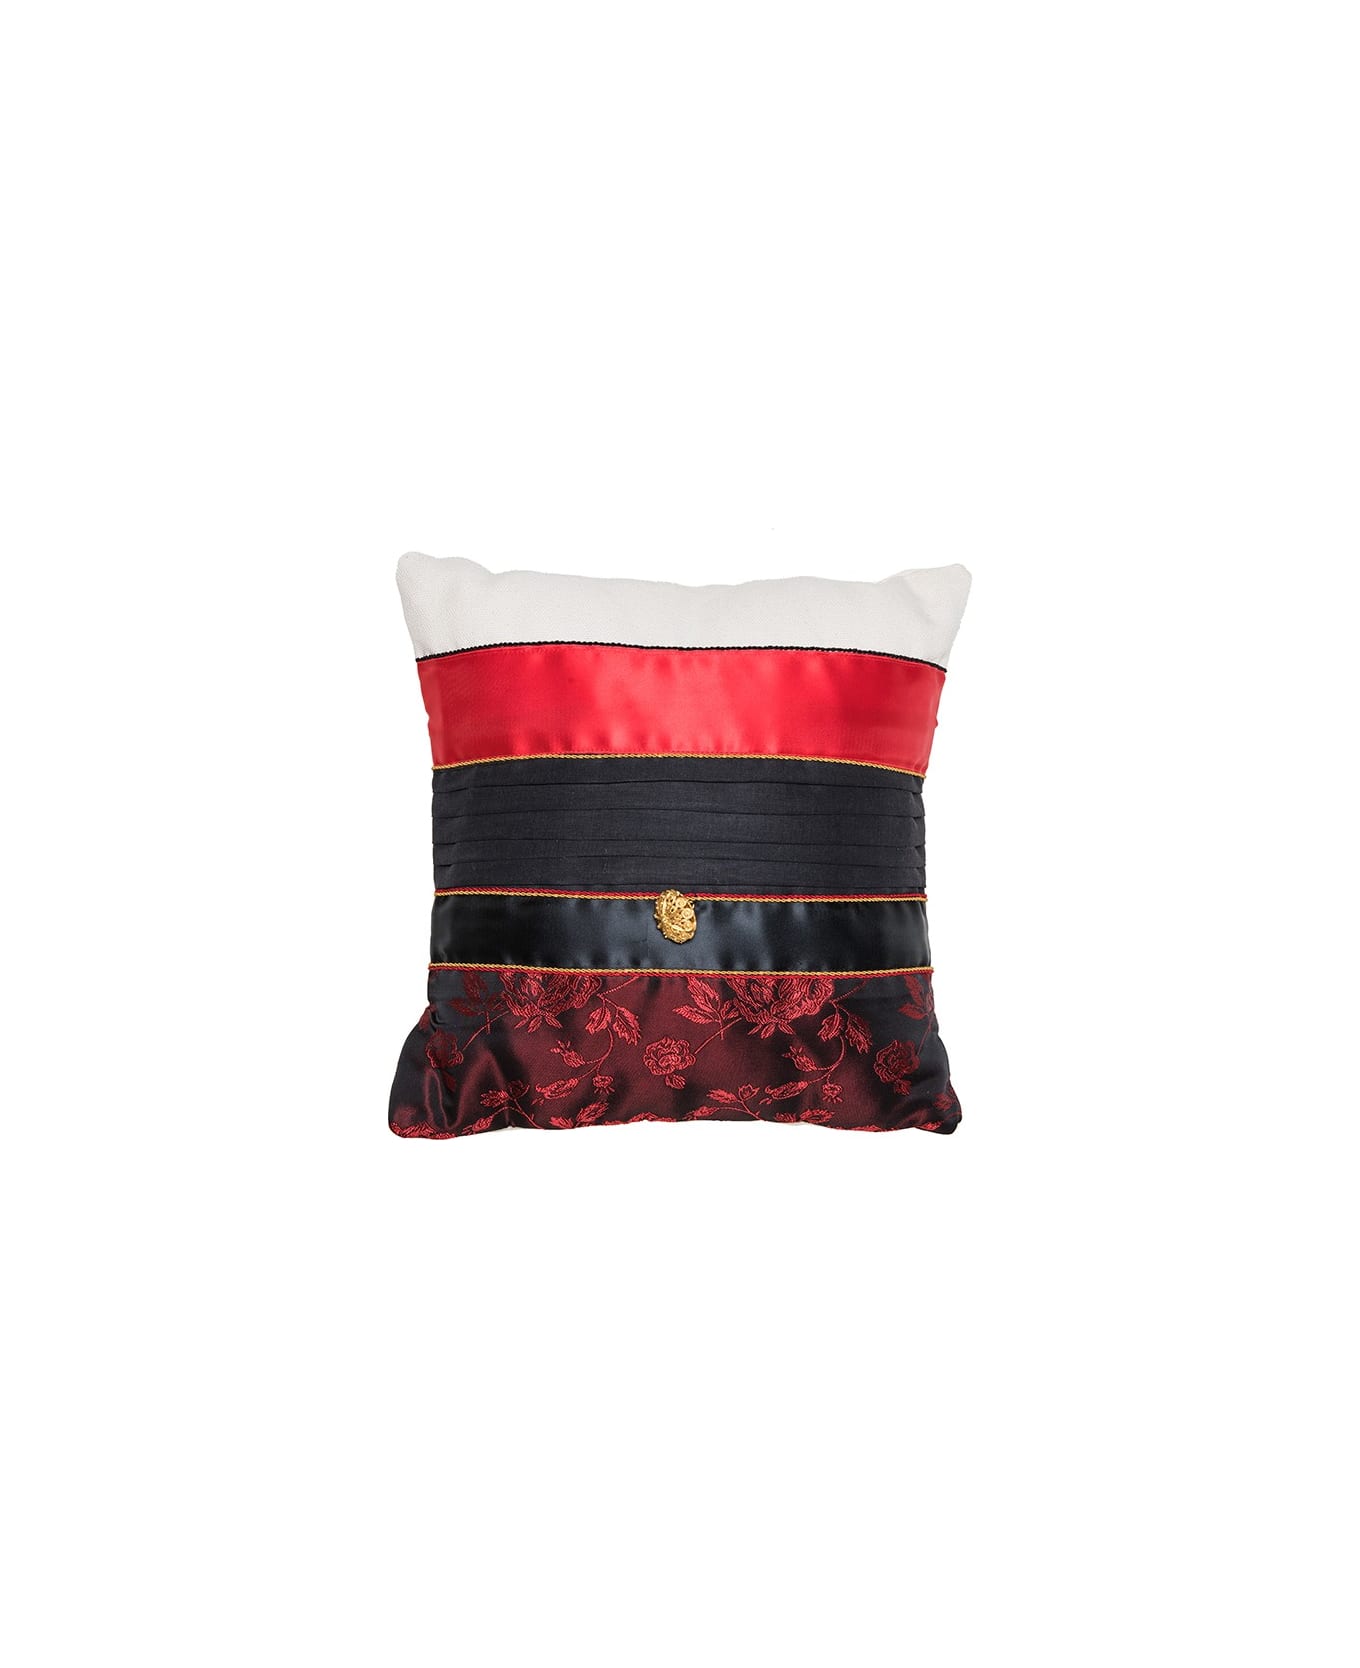 Le Botteghe su Gologone Cushions Costumbres 50x50 Cm - Red Fantasy クッション